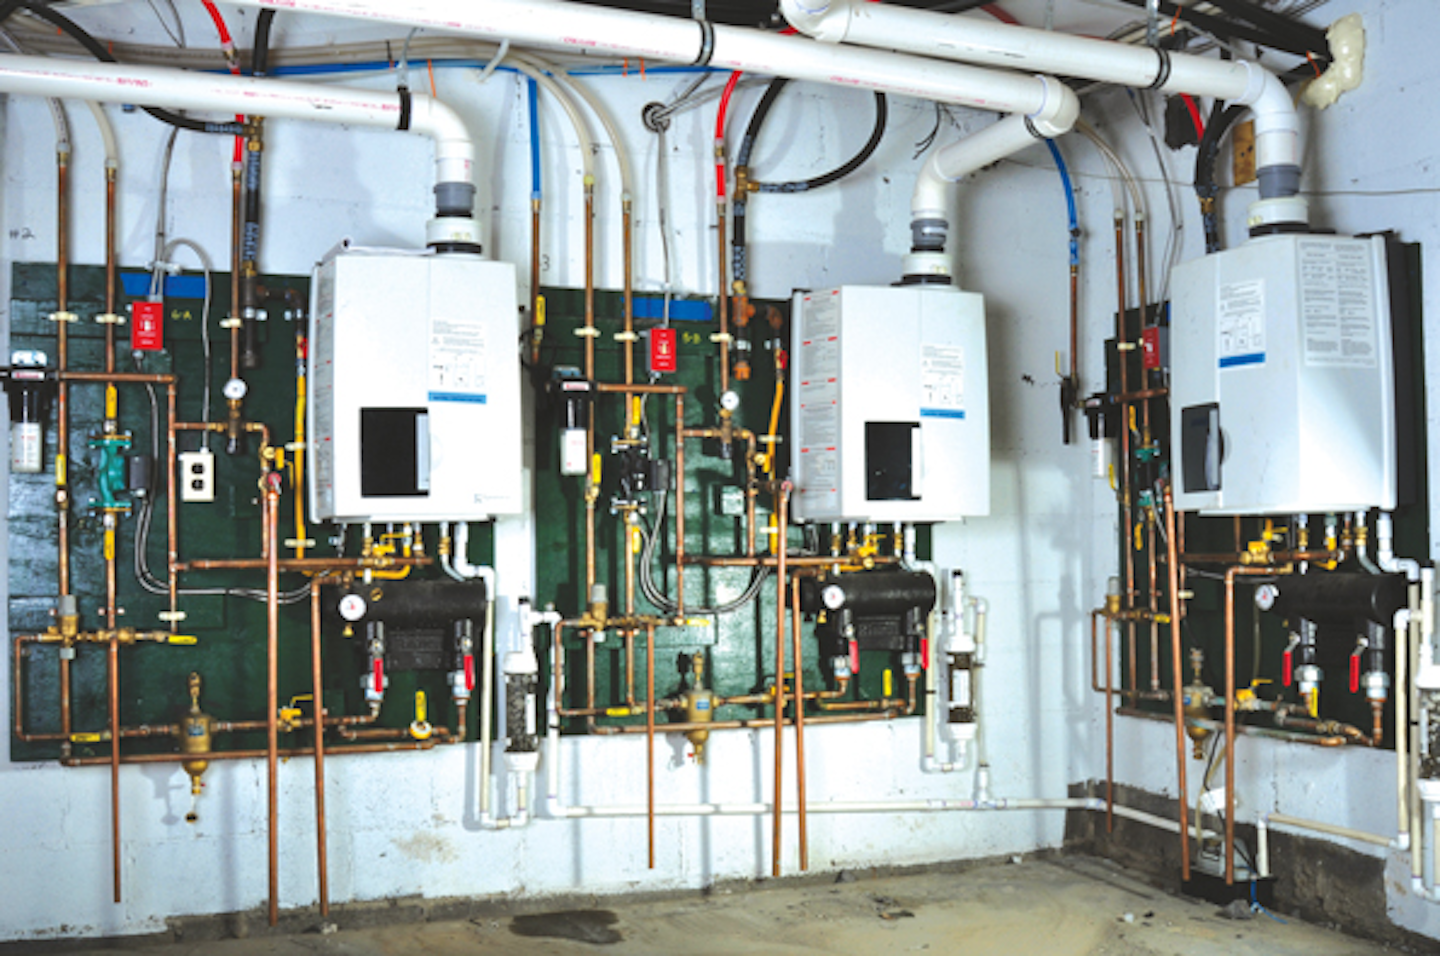 High Efficiency Condensing Boilers For Multifamily Applications Hpac Engineering